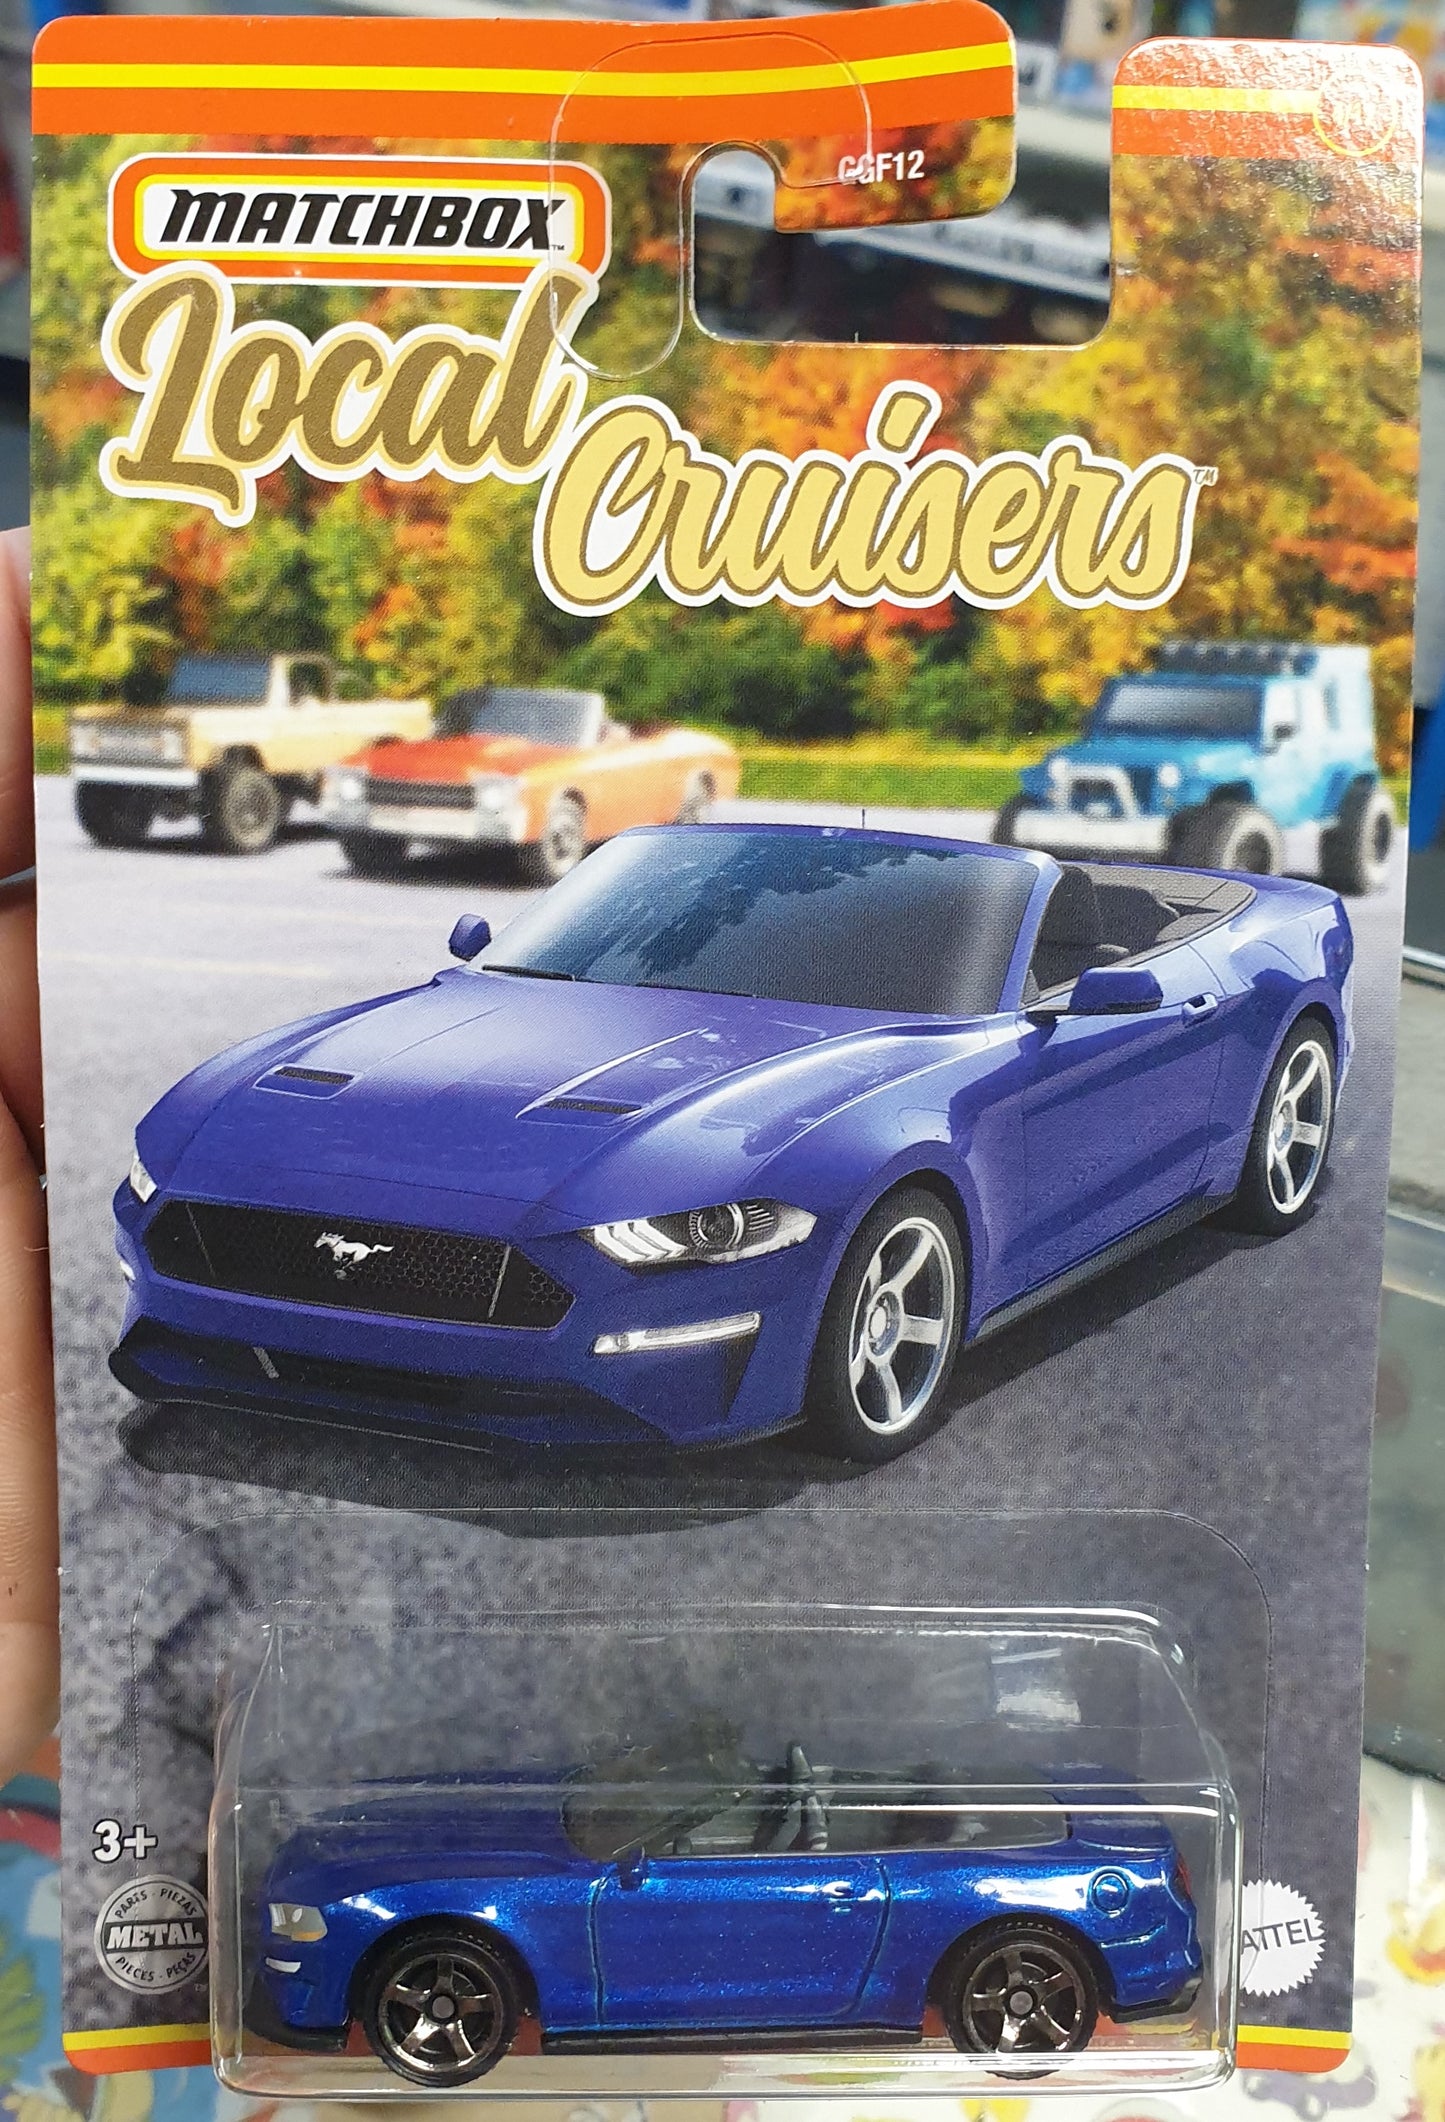 Matchbox - Local Cruisers - 2018 Ford Mustang - Dark Blue